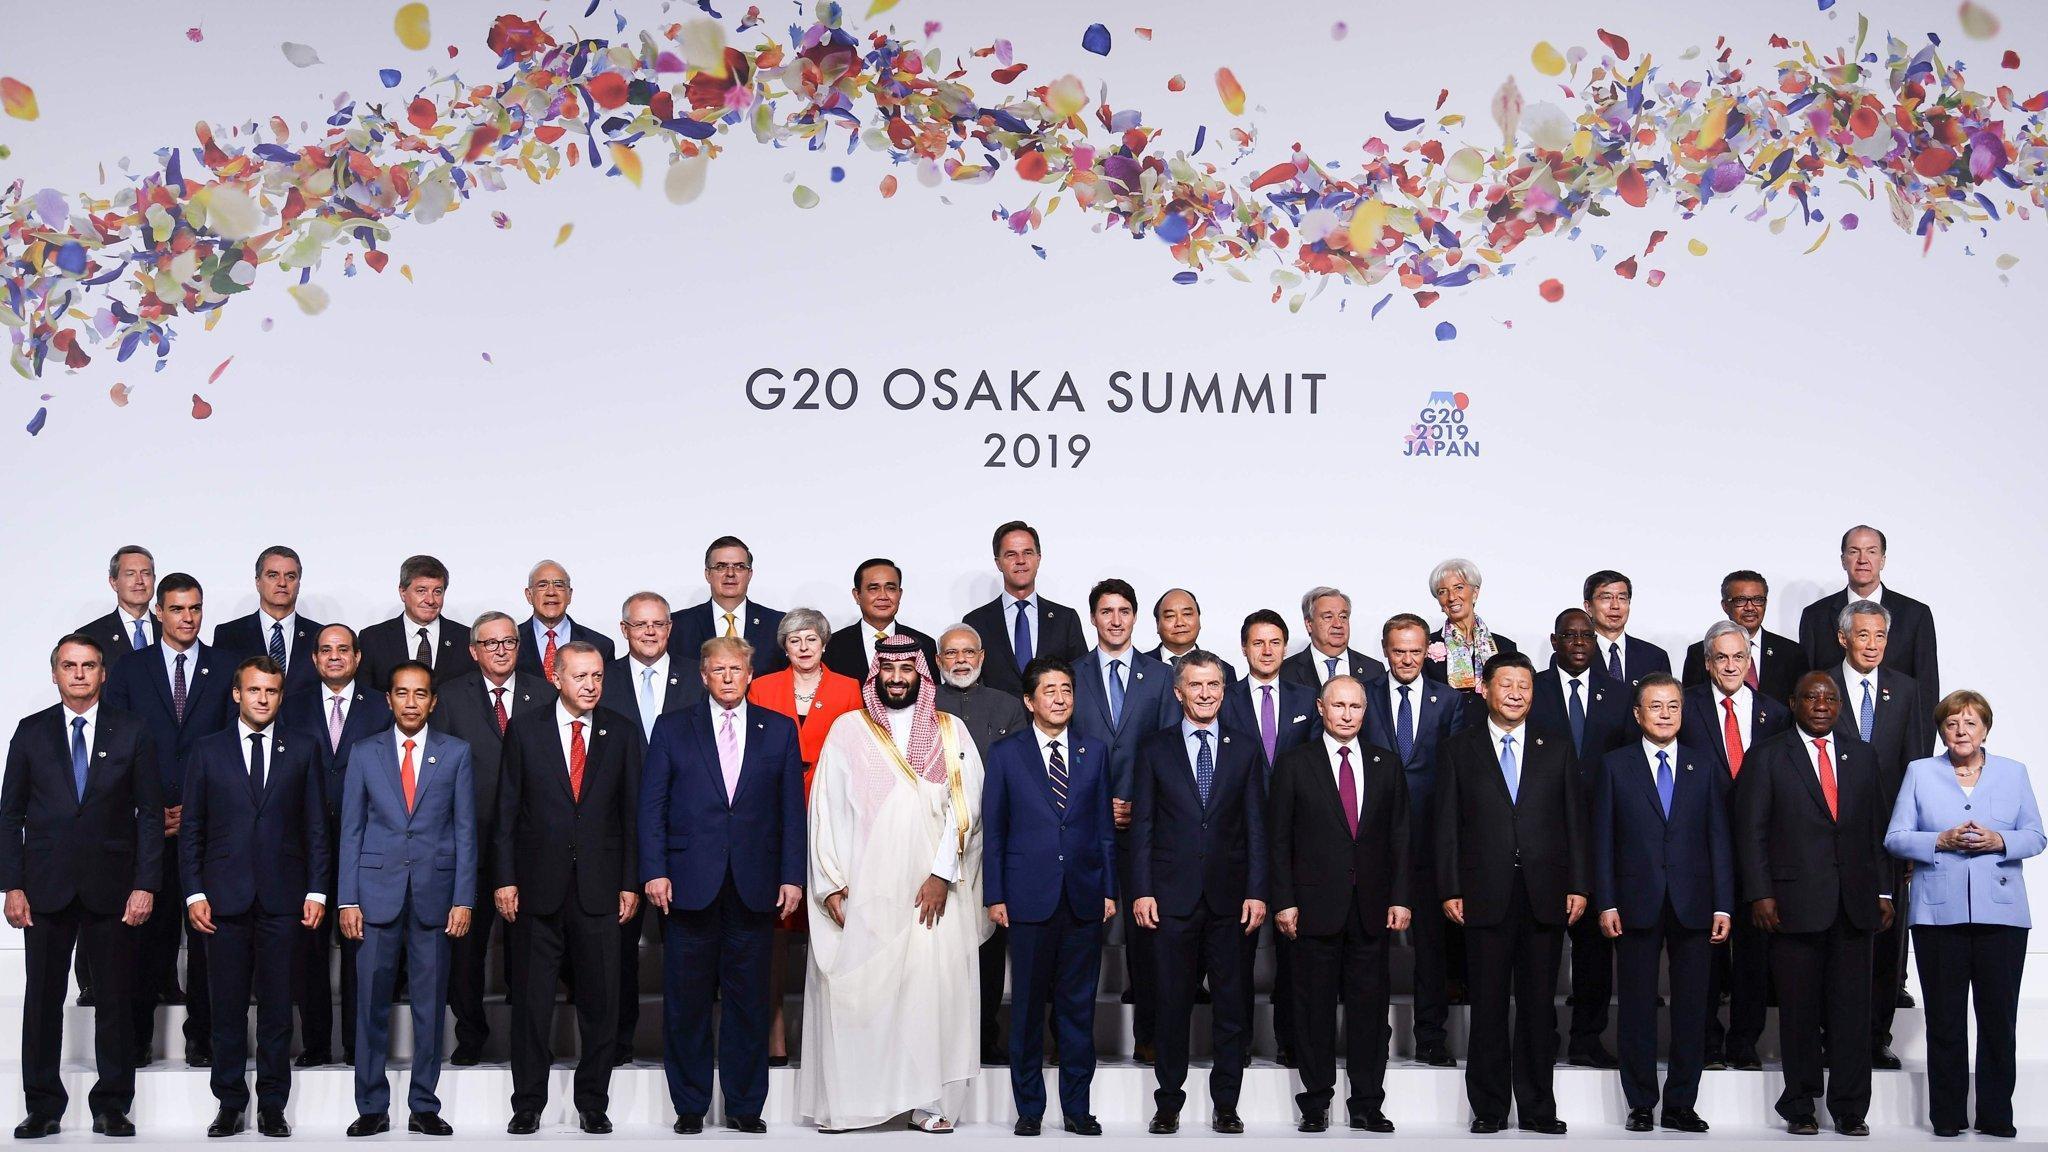 World leaders gather to talk tough issues at G20 summit - Türkiye News